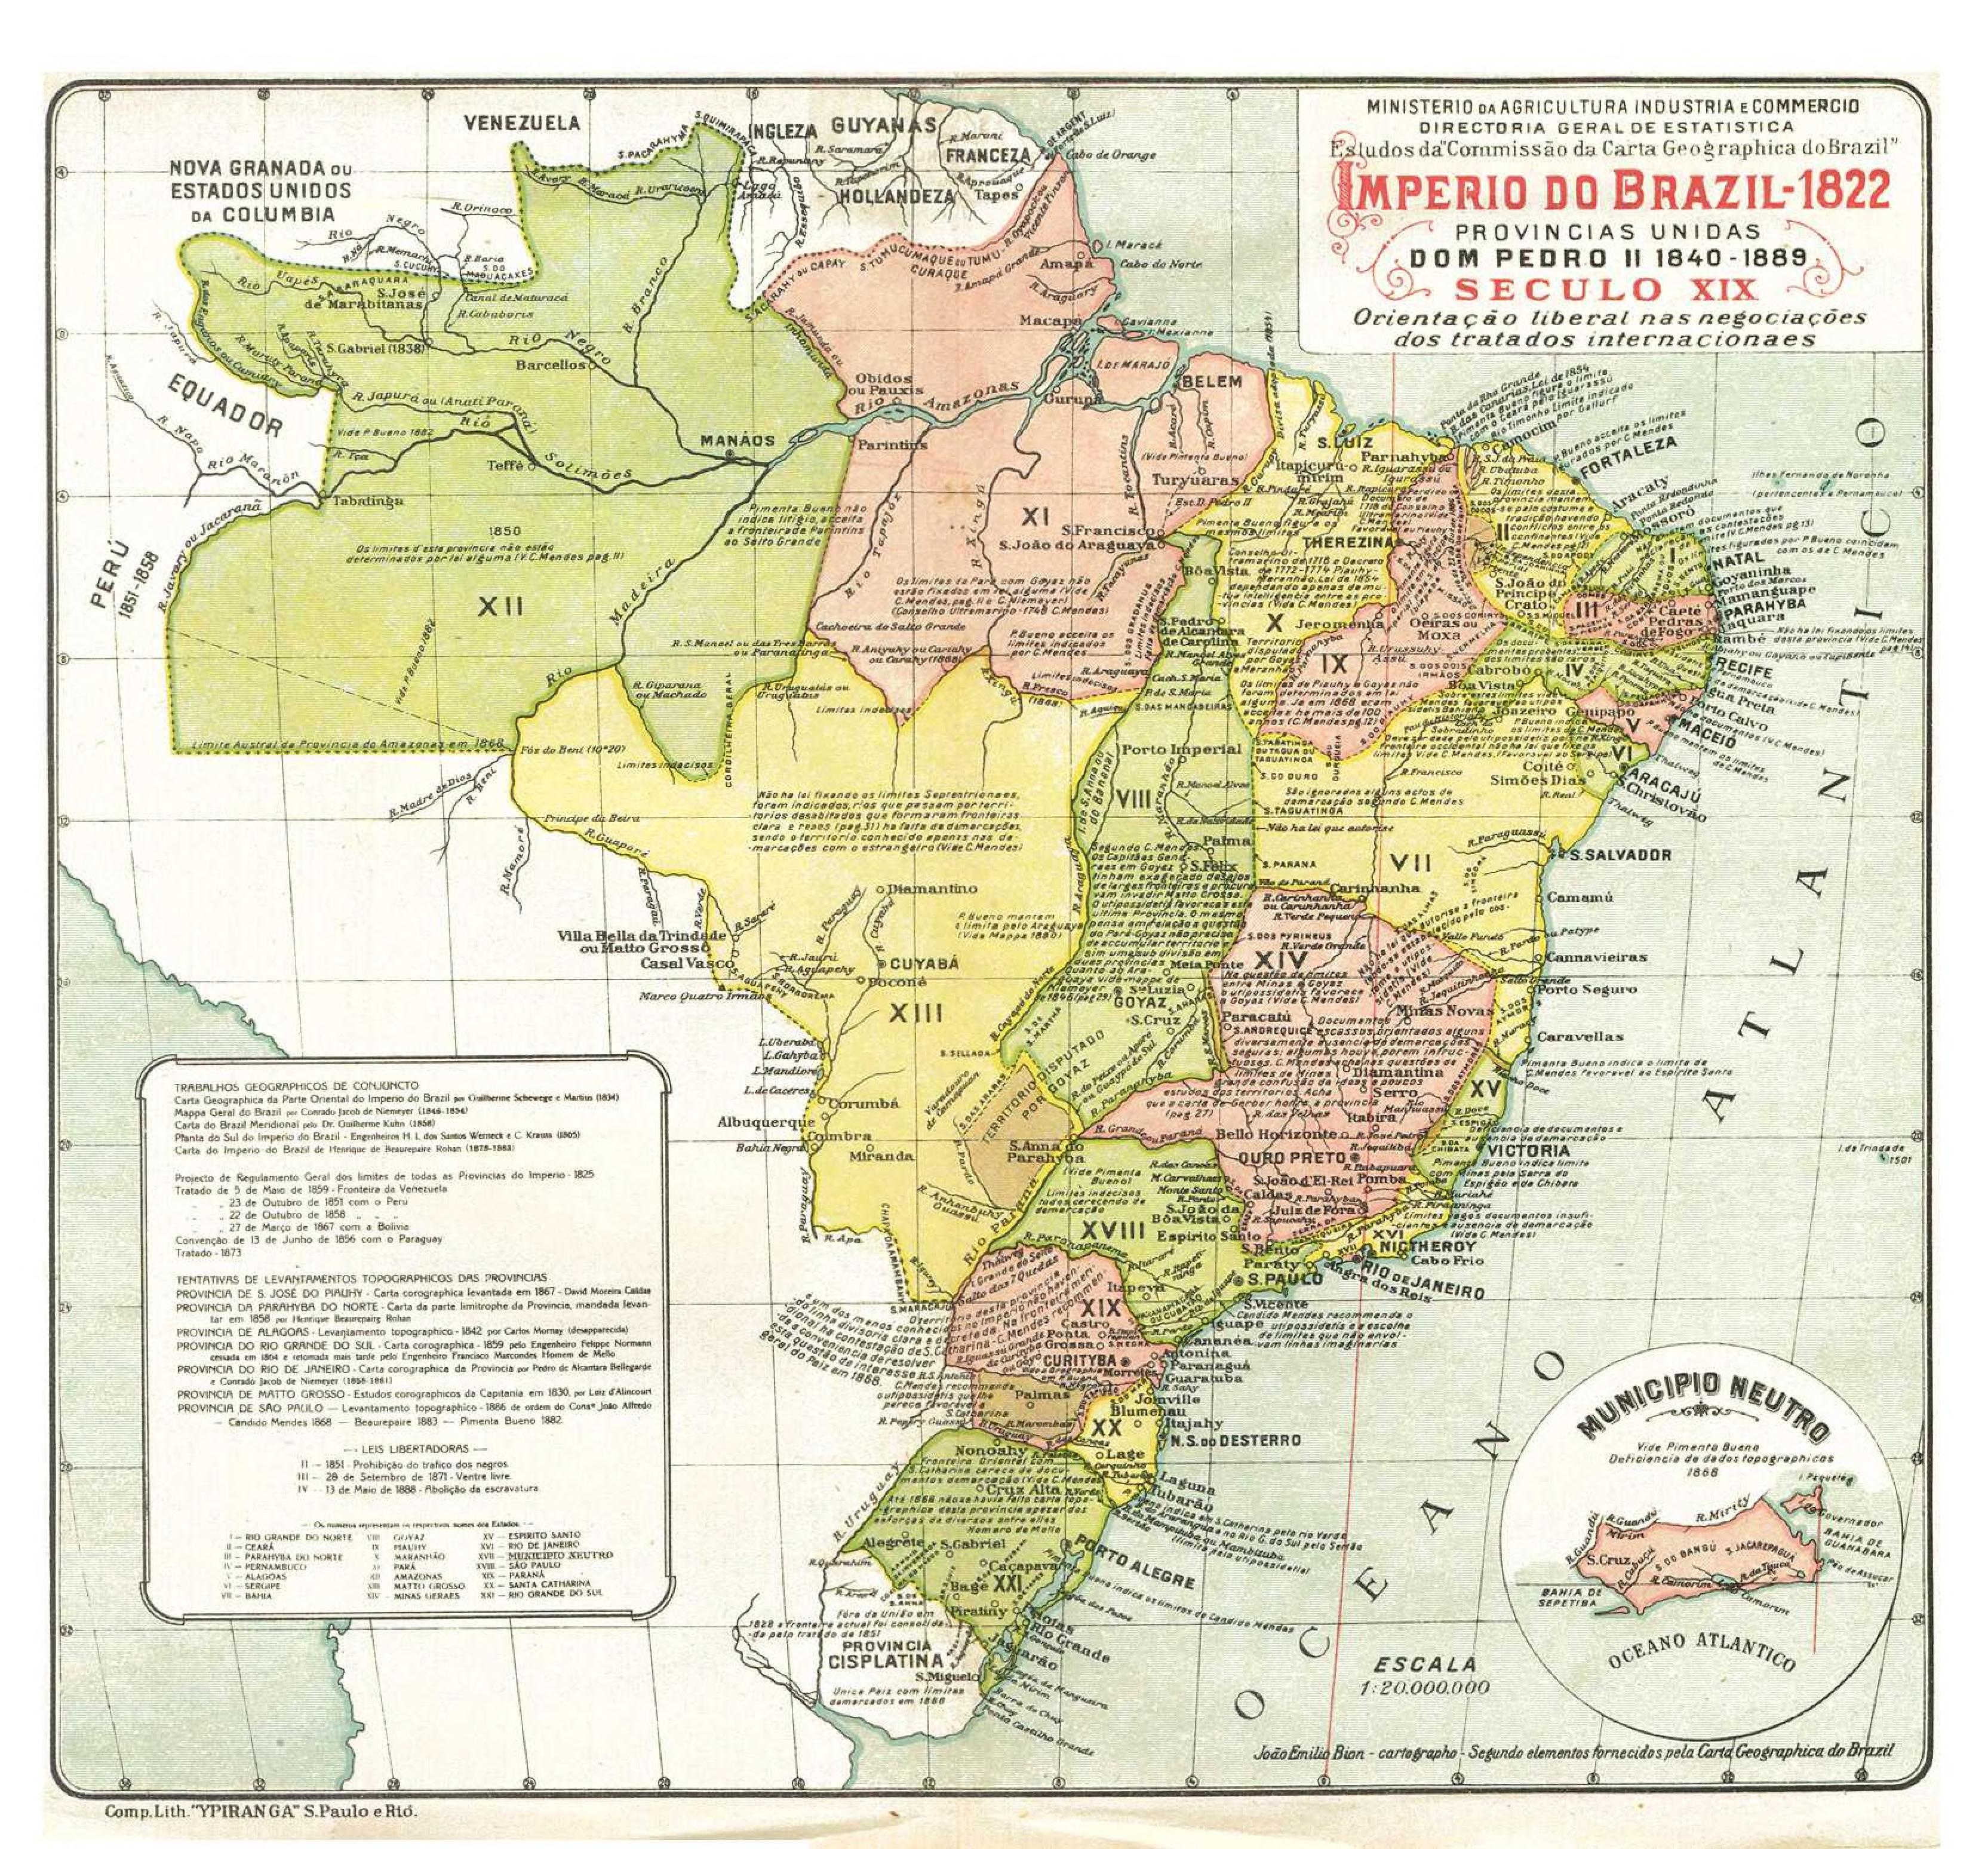 File:Imperio do Brazil 1822.jpg - Wikimedia Commons